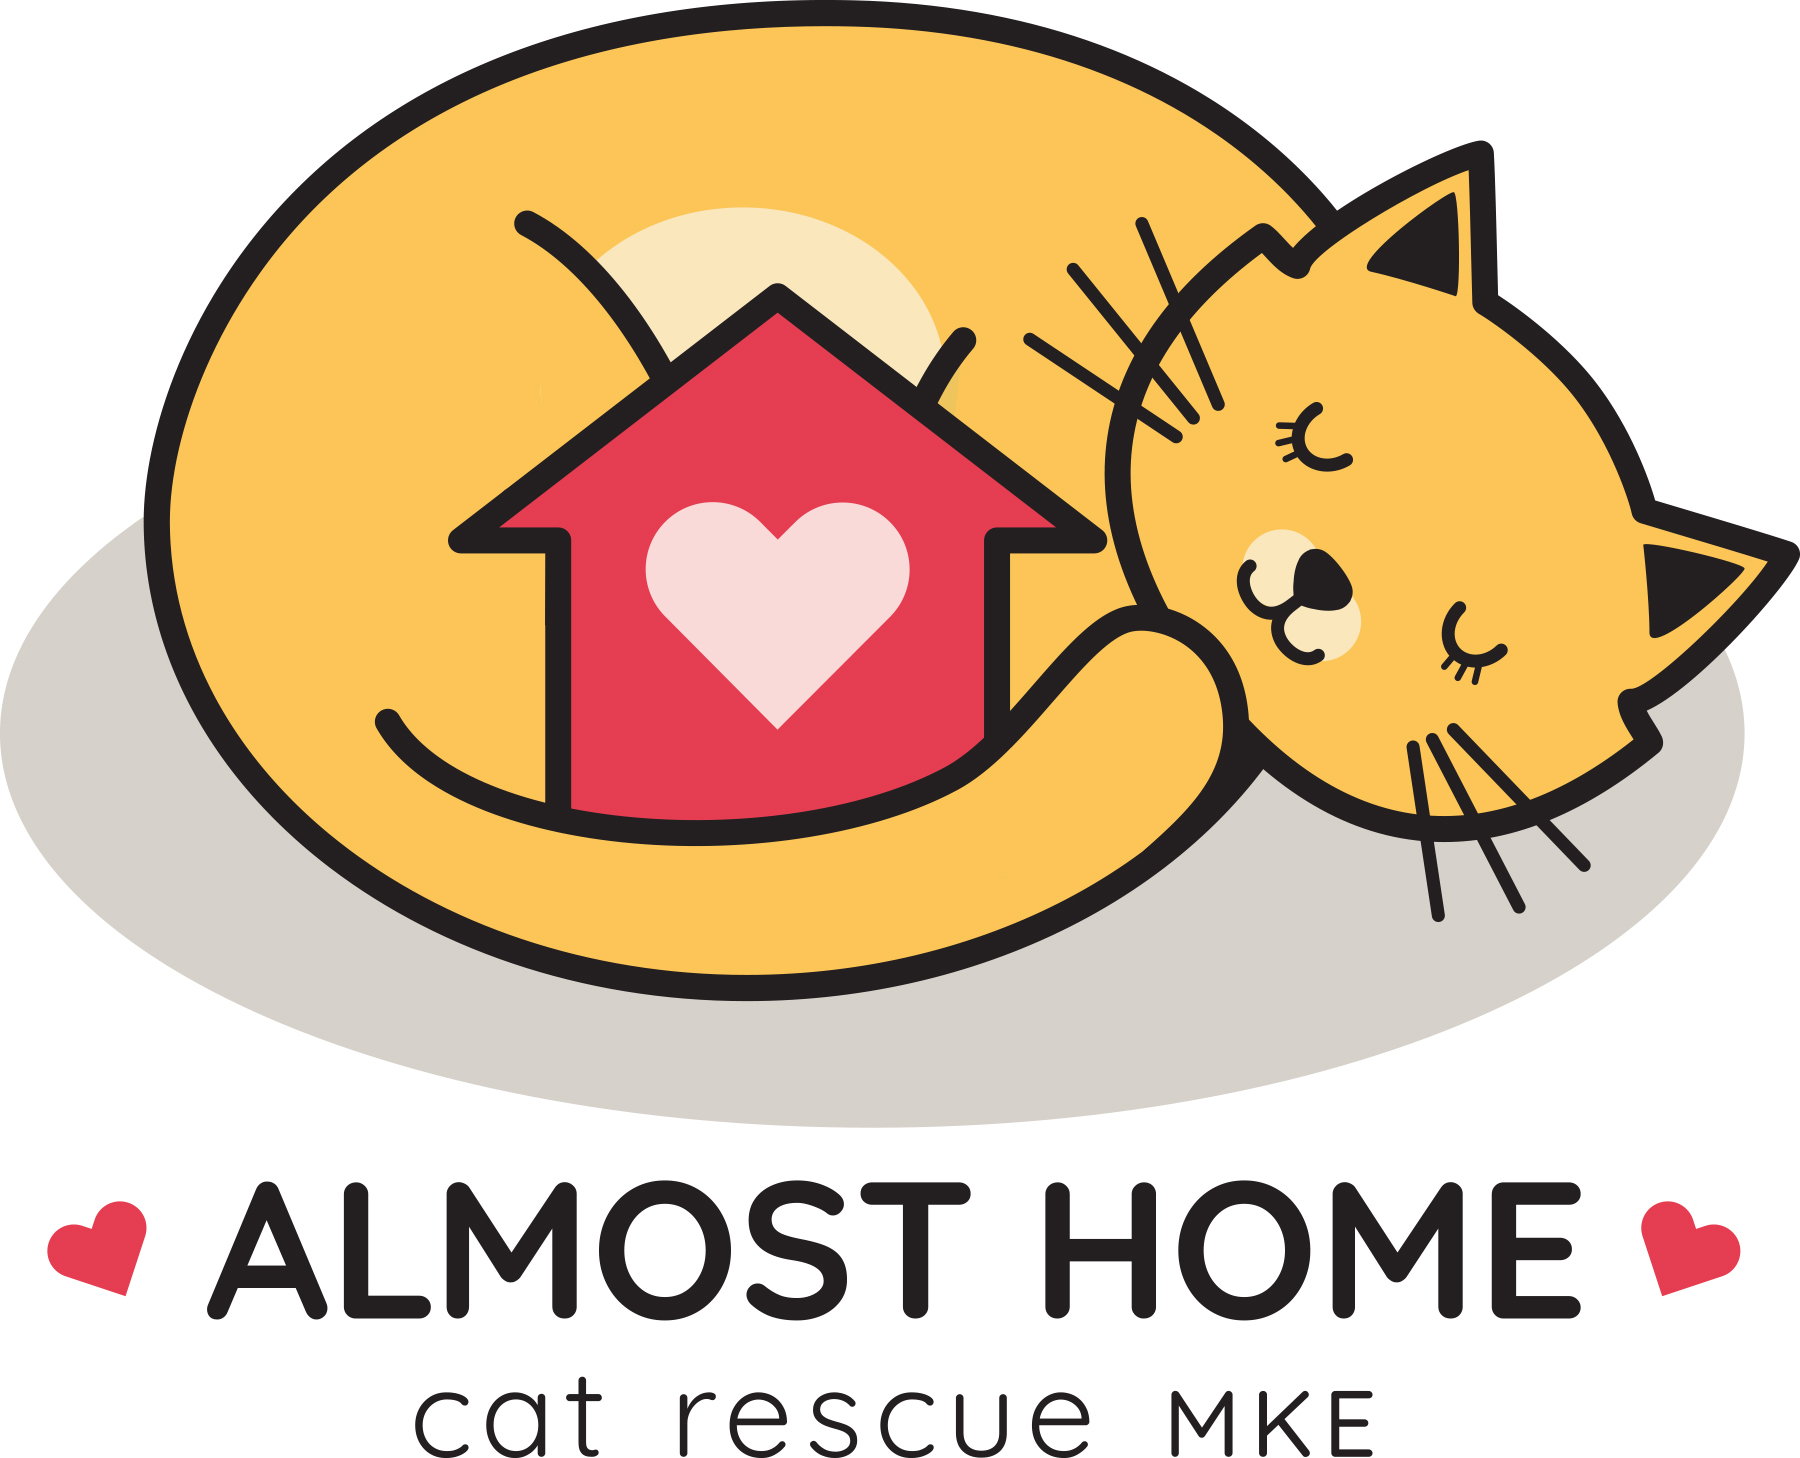 Almost Home Cat Rescue MKE logo